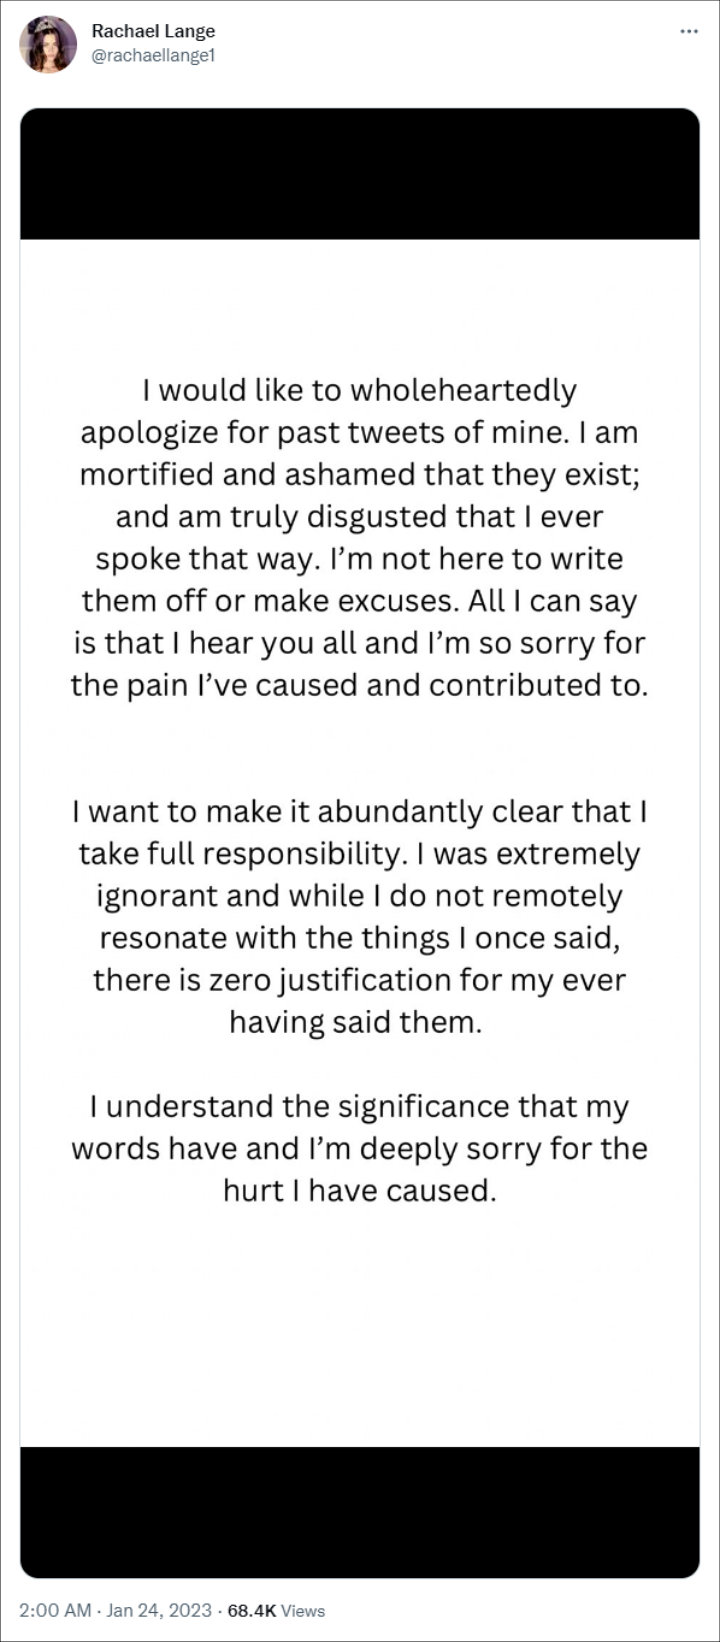 Rachael Lange's apology note